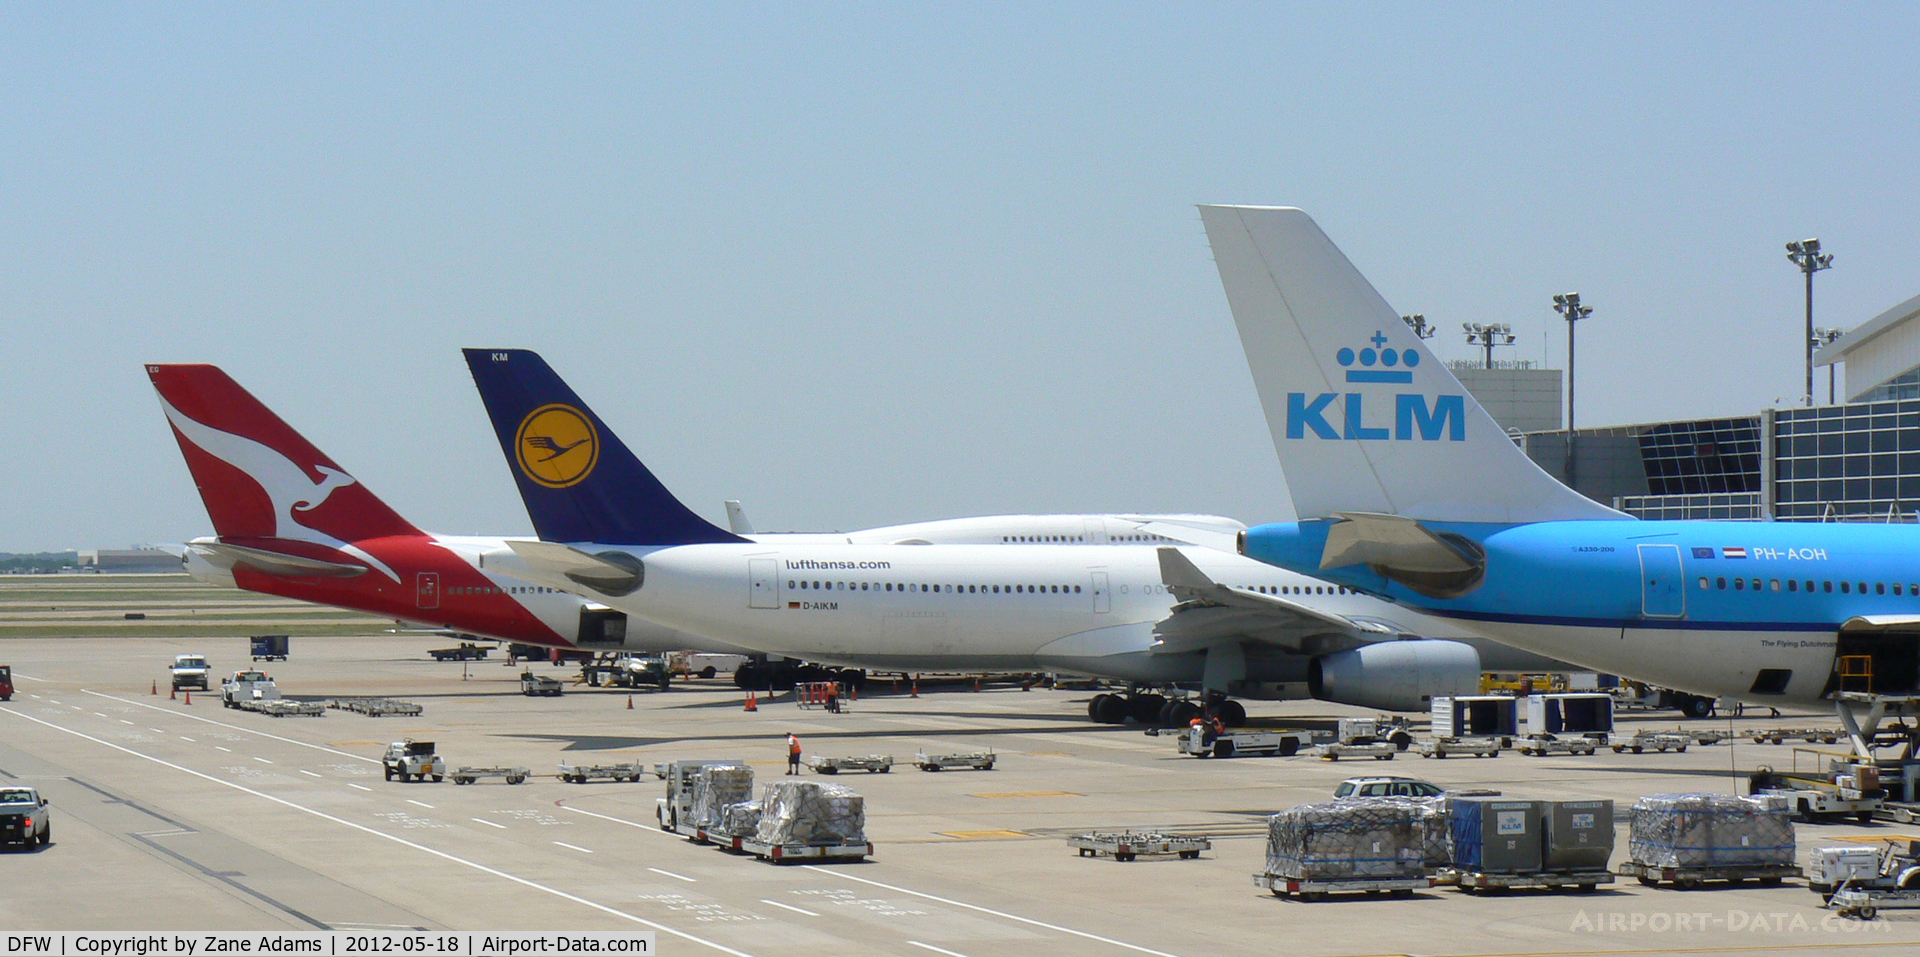 Dallas/fort Worth International Airport (DFW) - QANTAS, Lufthansa and KLM at the gate - DFW Airport, Texas